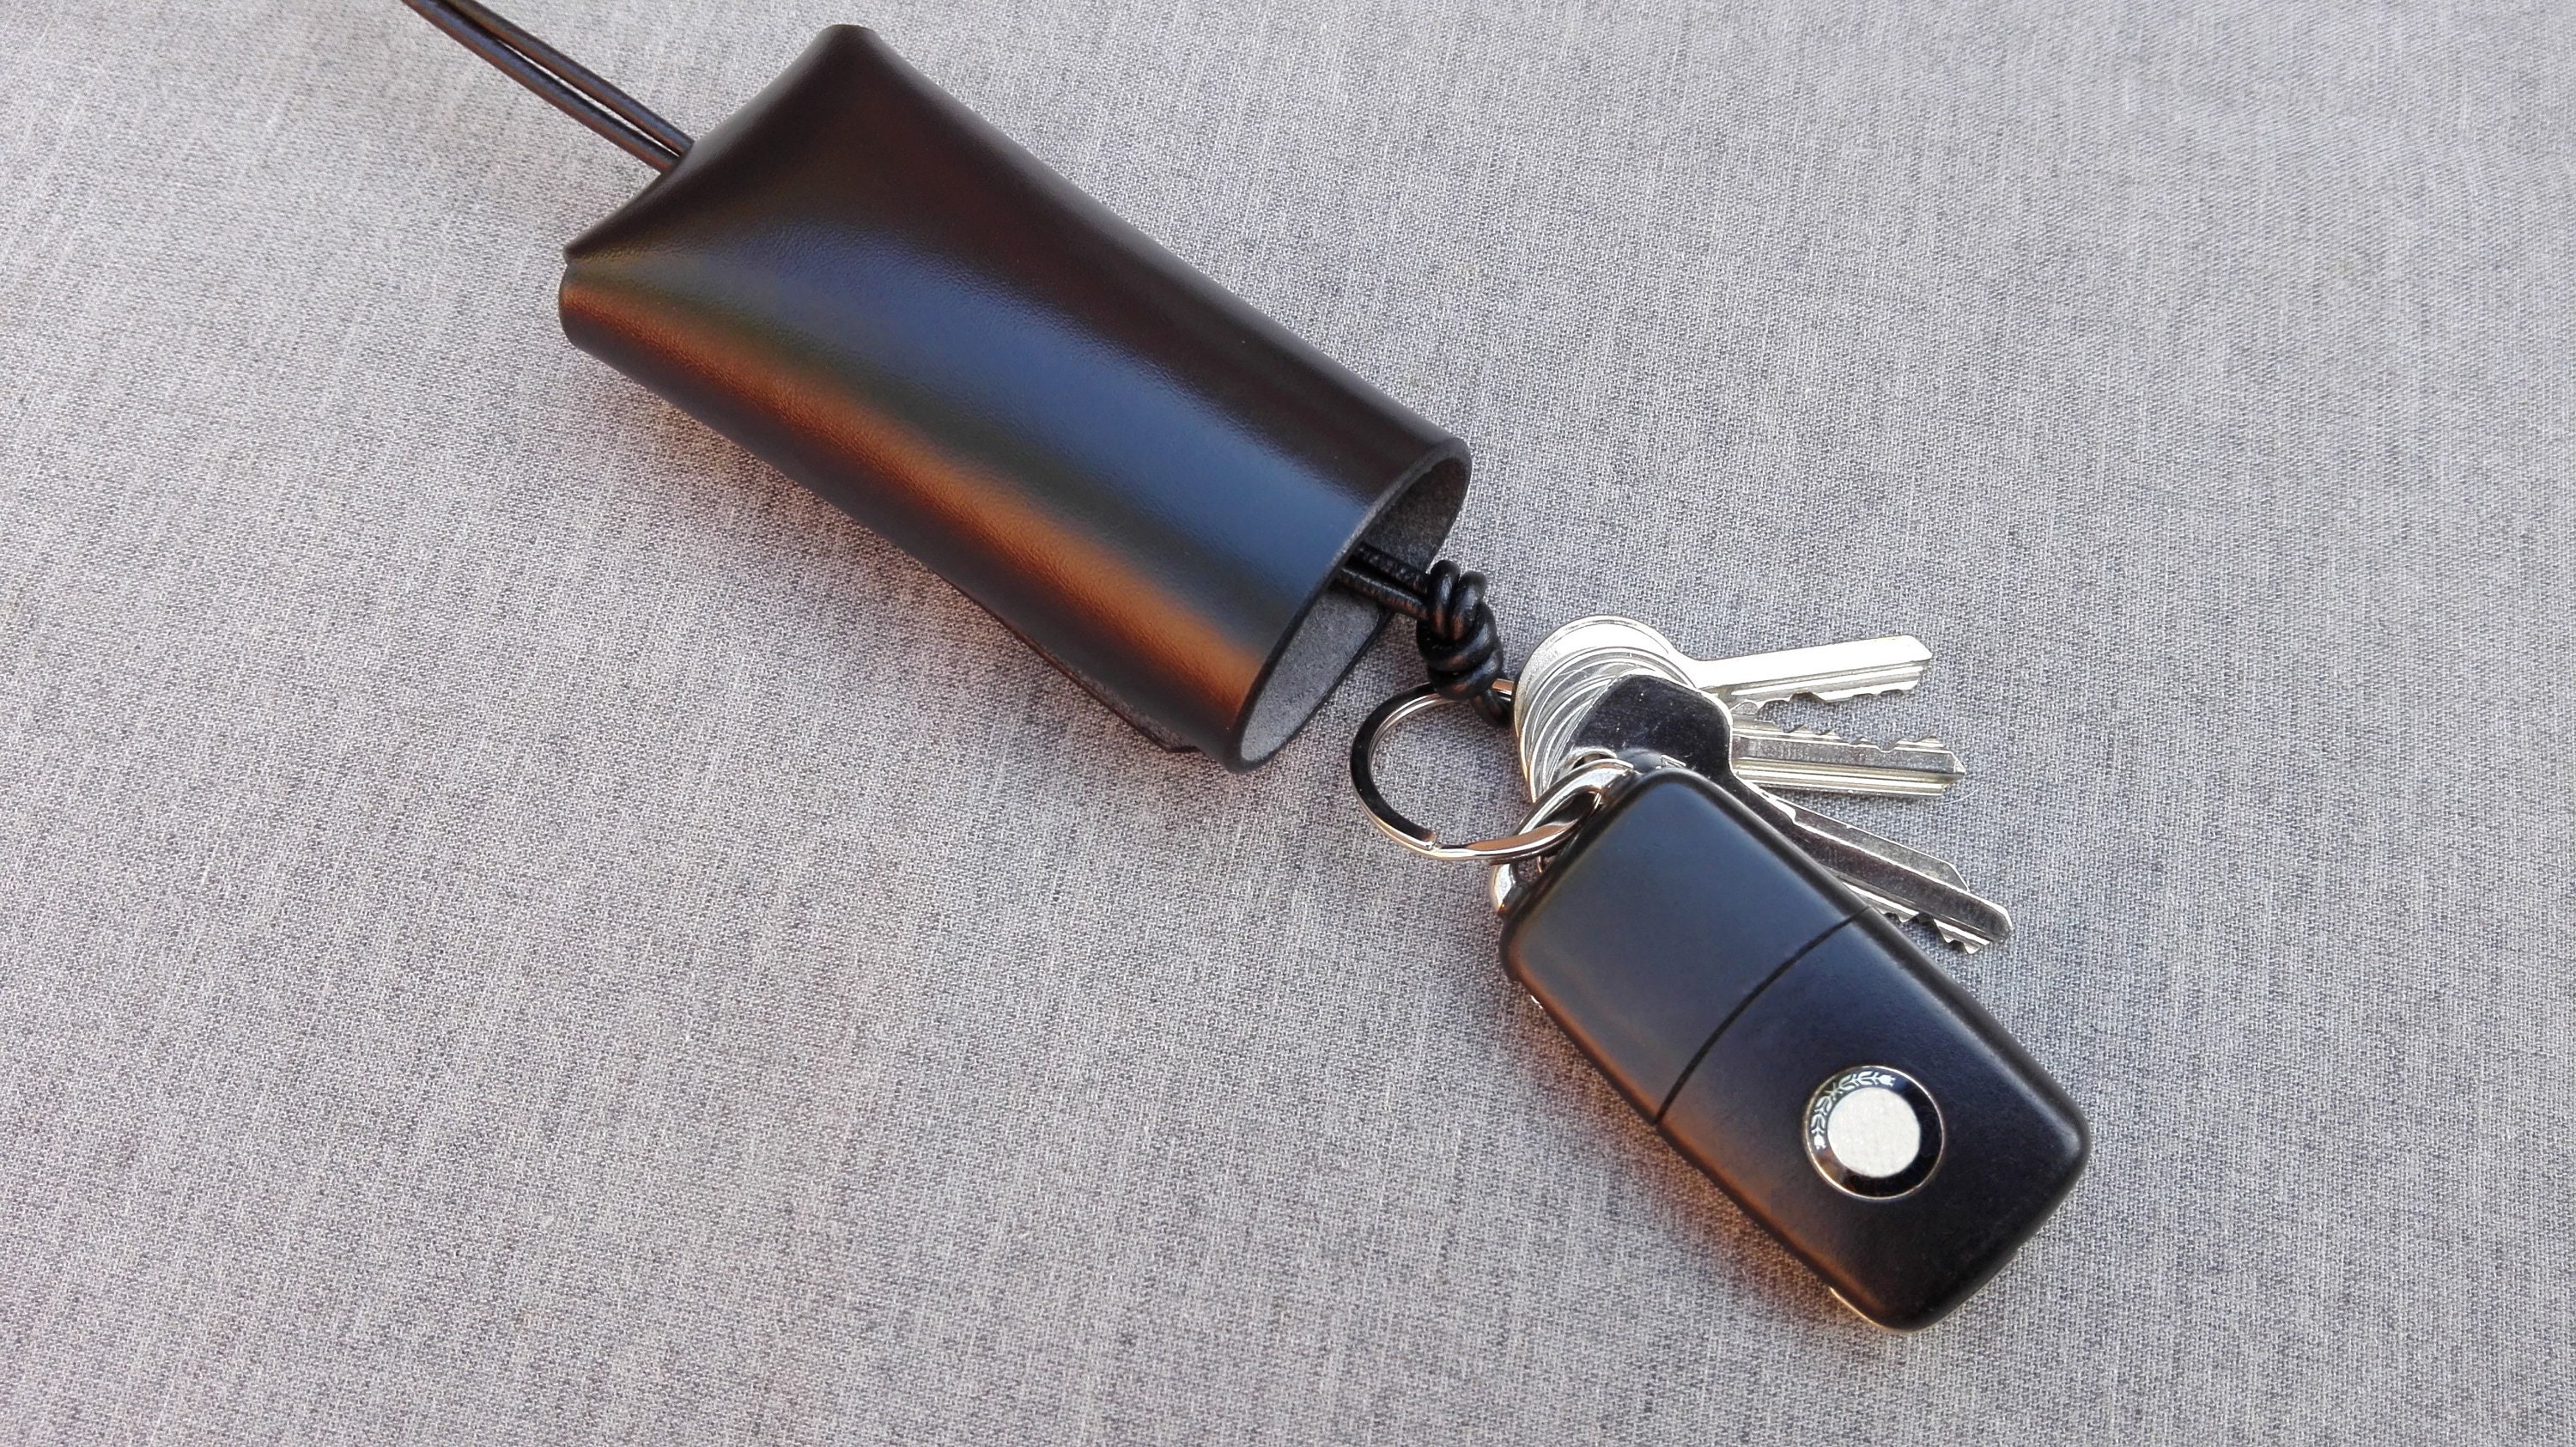 Key Bell Key Clochette Personalized Custom Accessories 